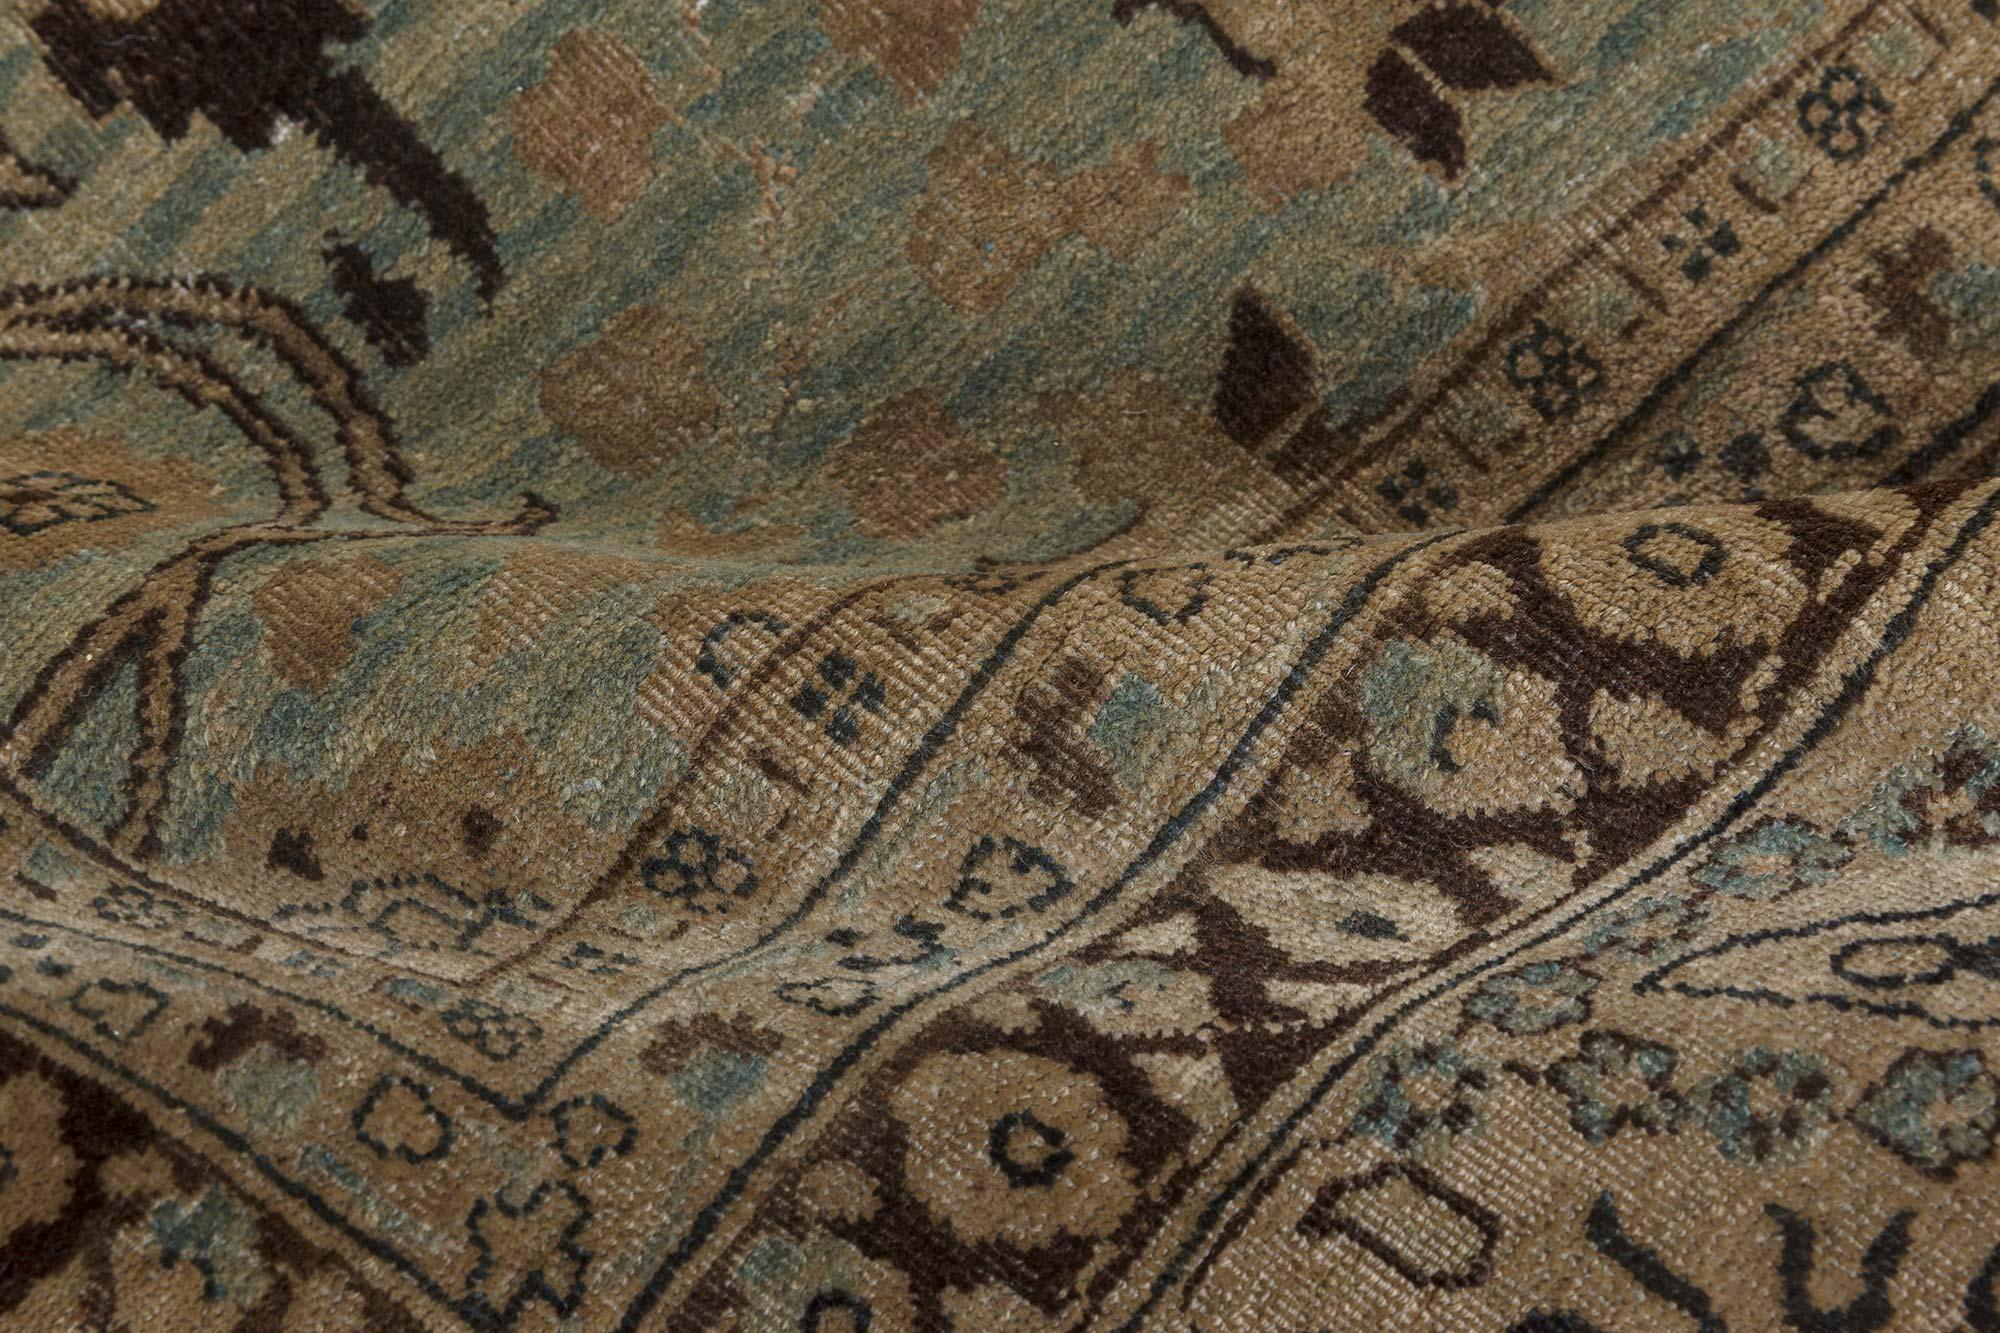 19th century Persian Tabriz carpet.
Size: 8'10